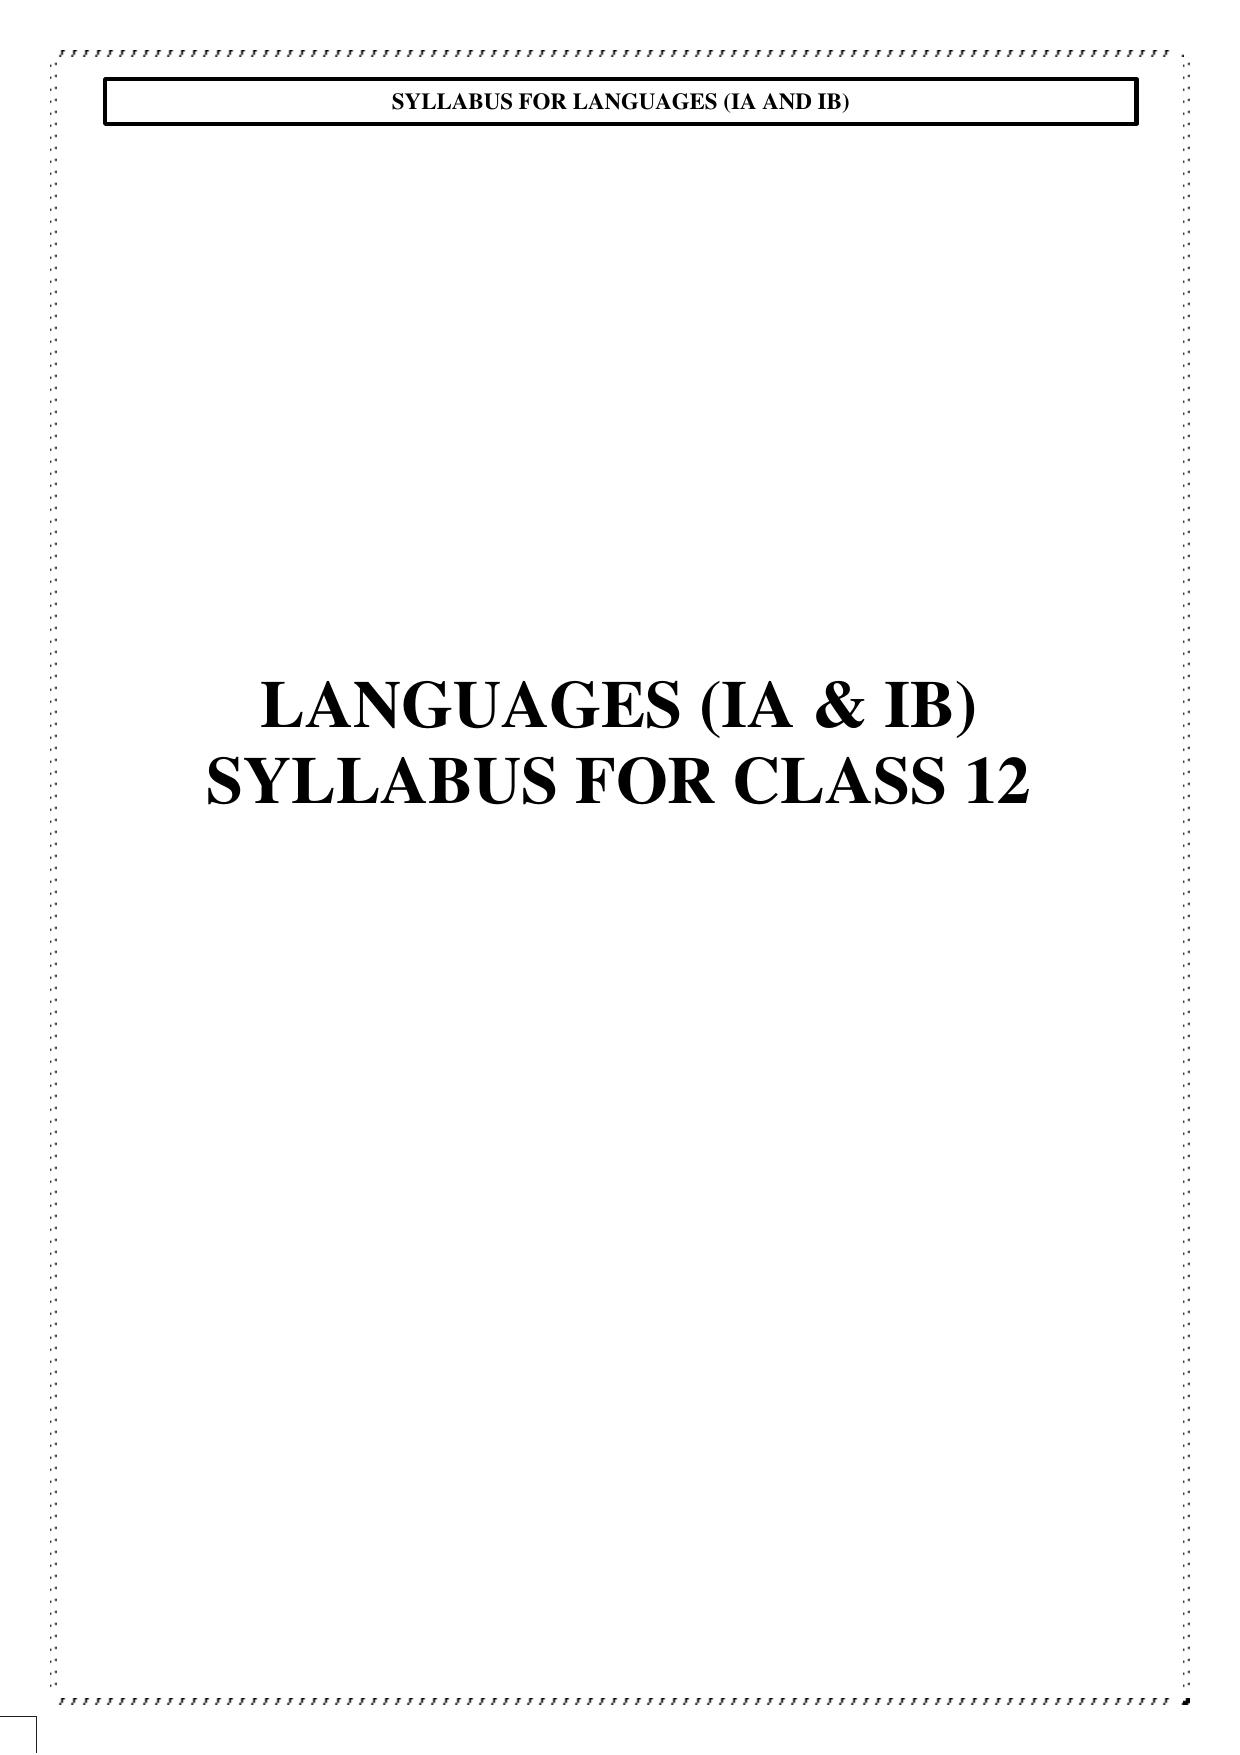 CUET Syllabus for Languages (IA & IB) (English) - Page 1